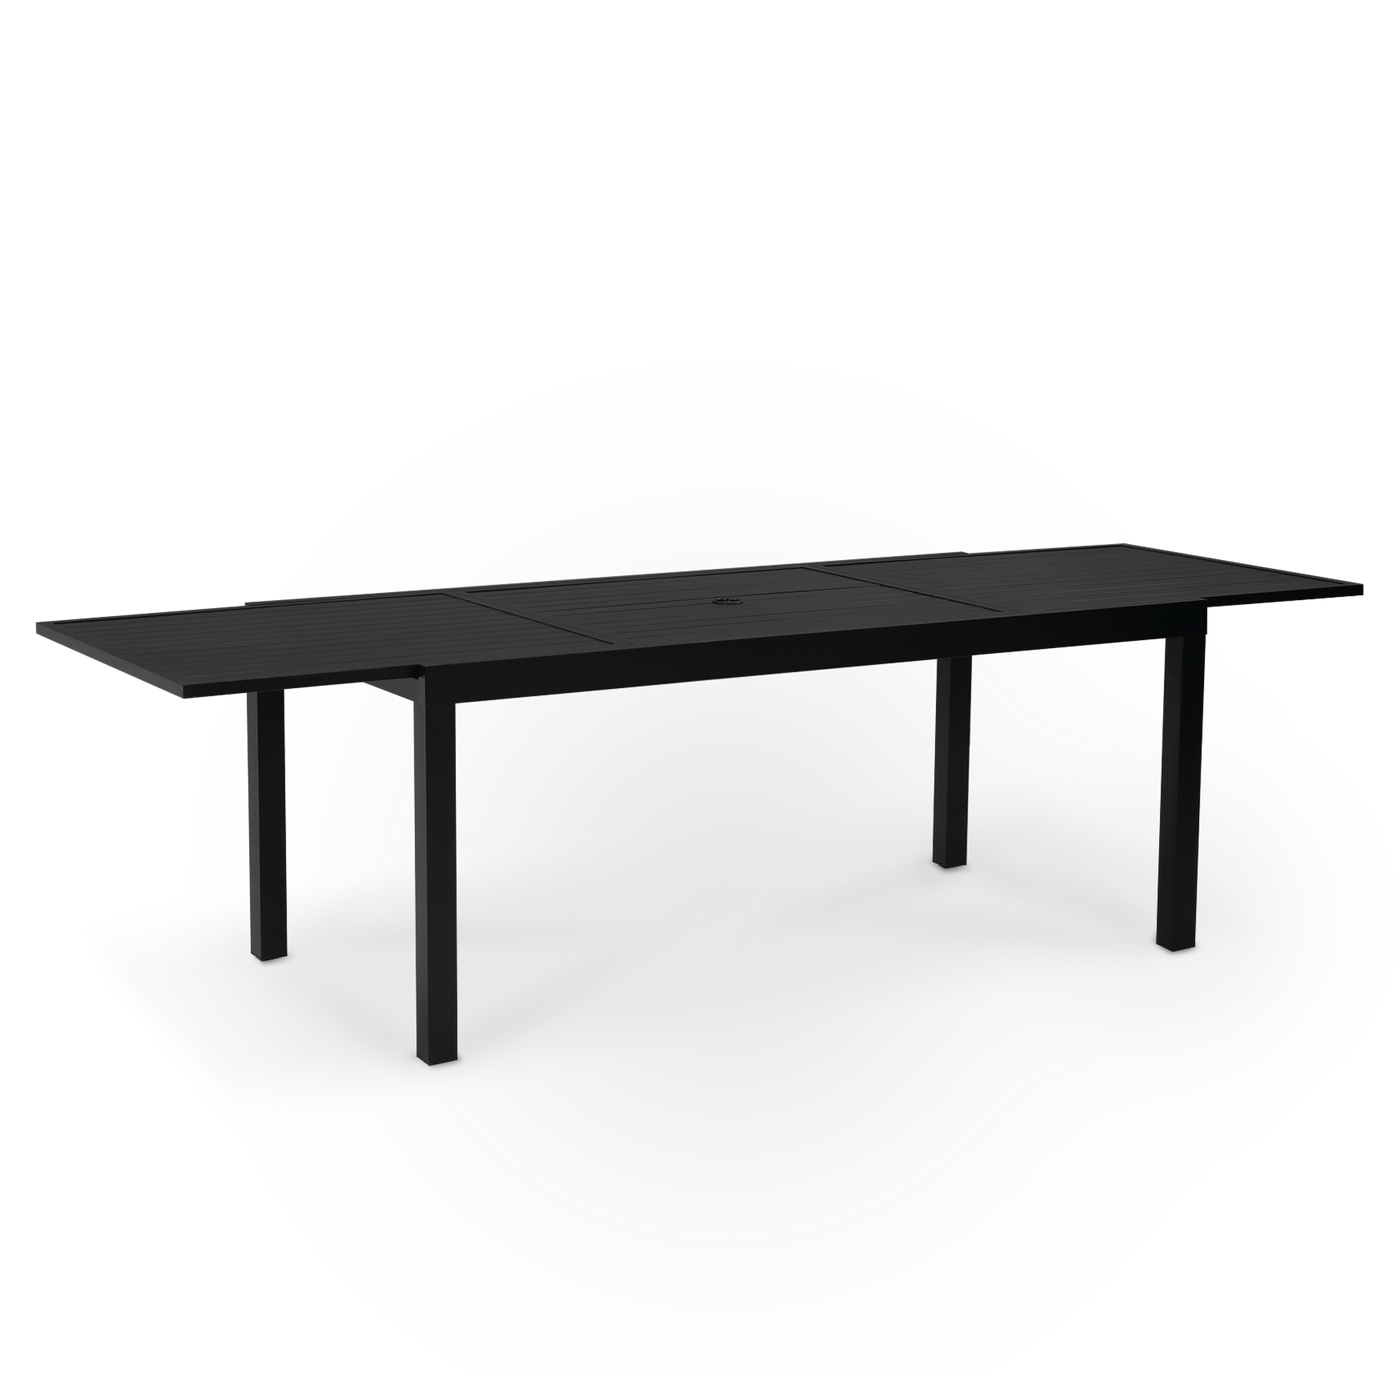 A black, modern office desk with a sleek, Pizzello Aluminum Patio Extendable Dining Table frame design.